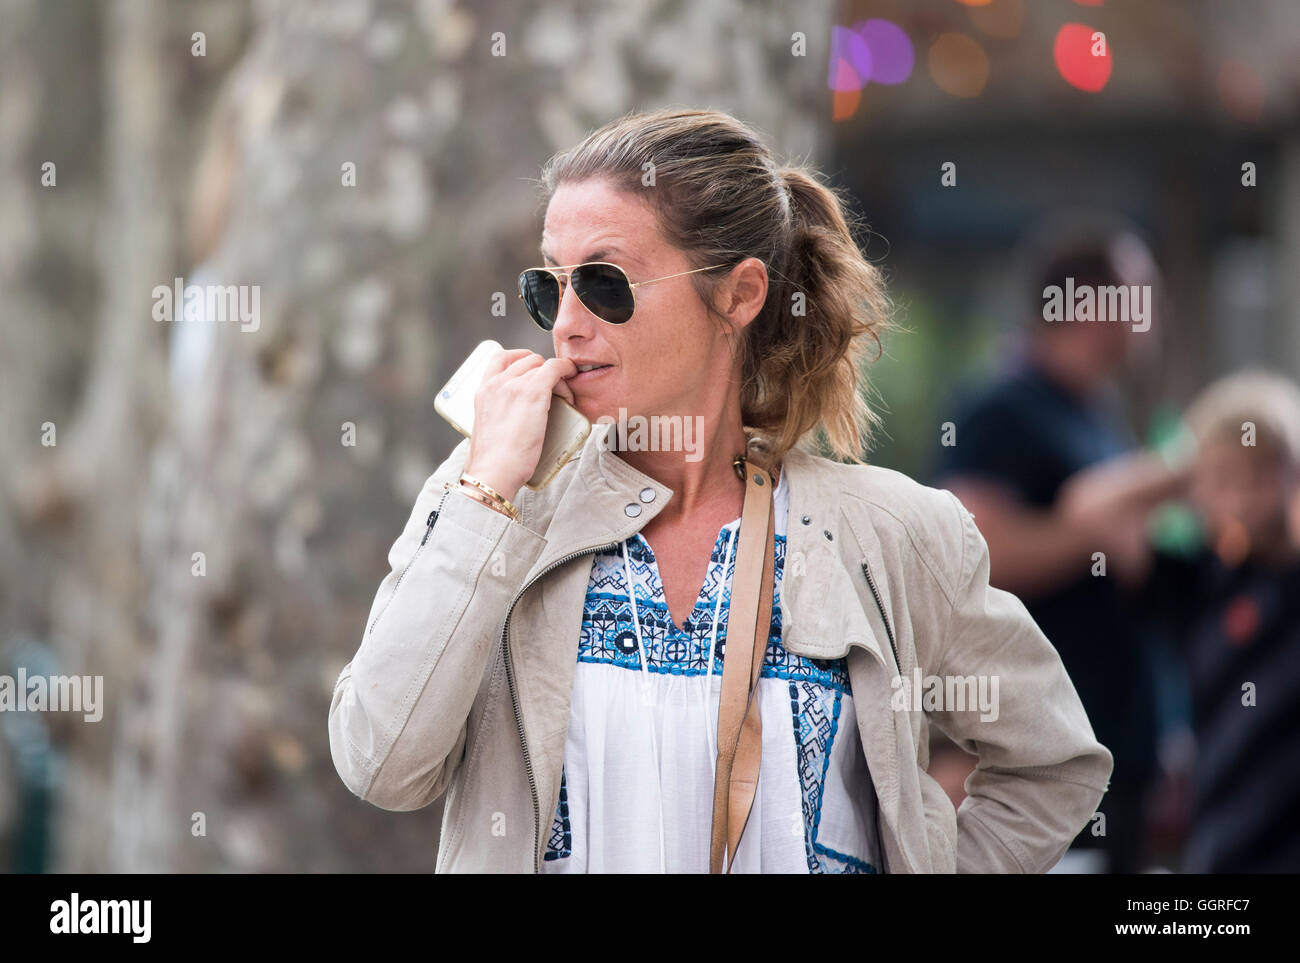 girl holding phone biting nails woman sunglasses Stock Photo